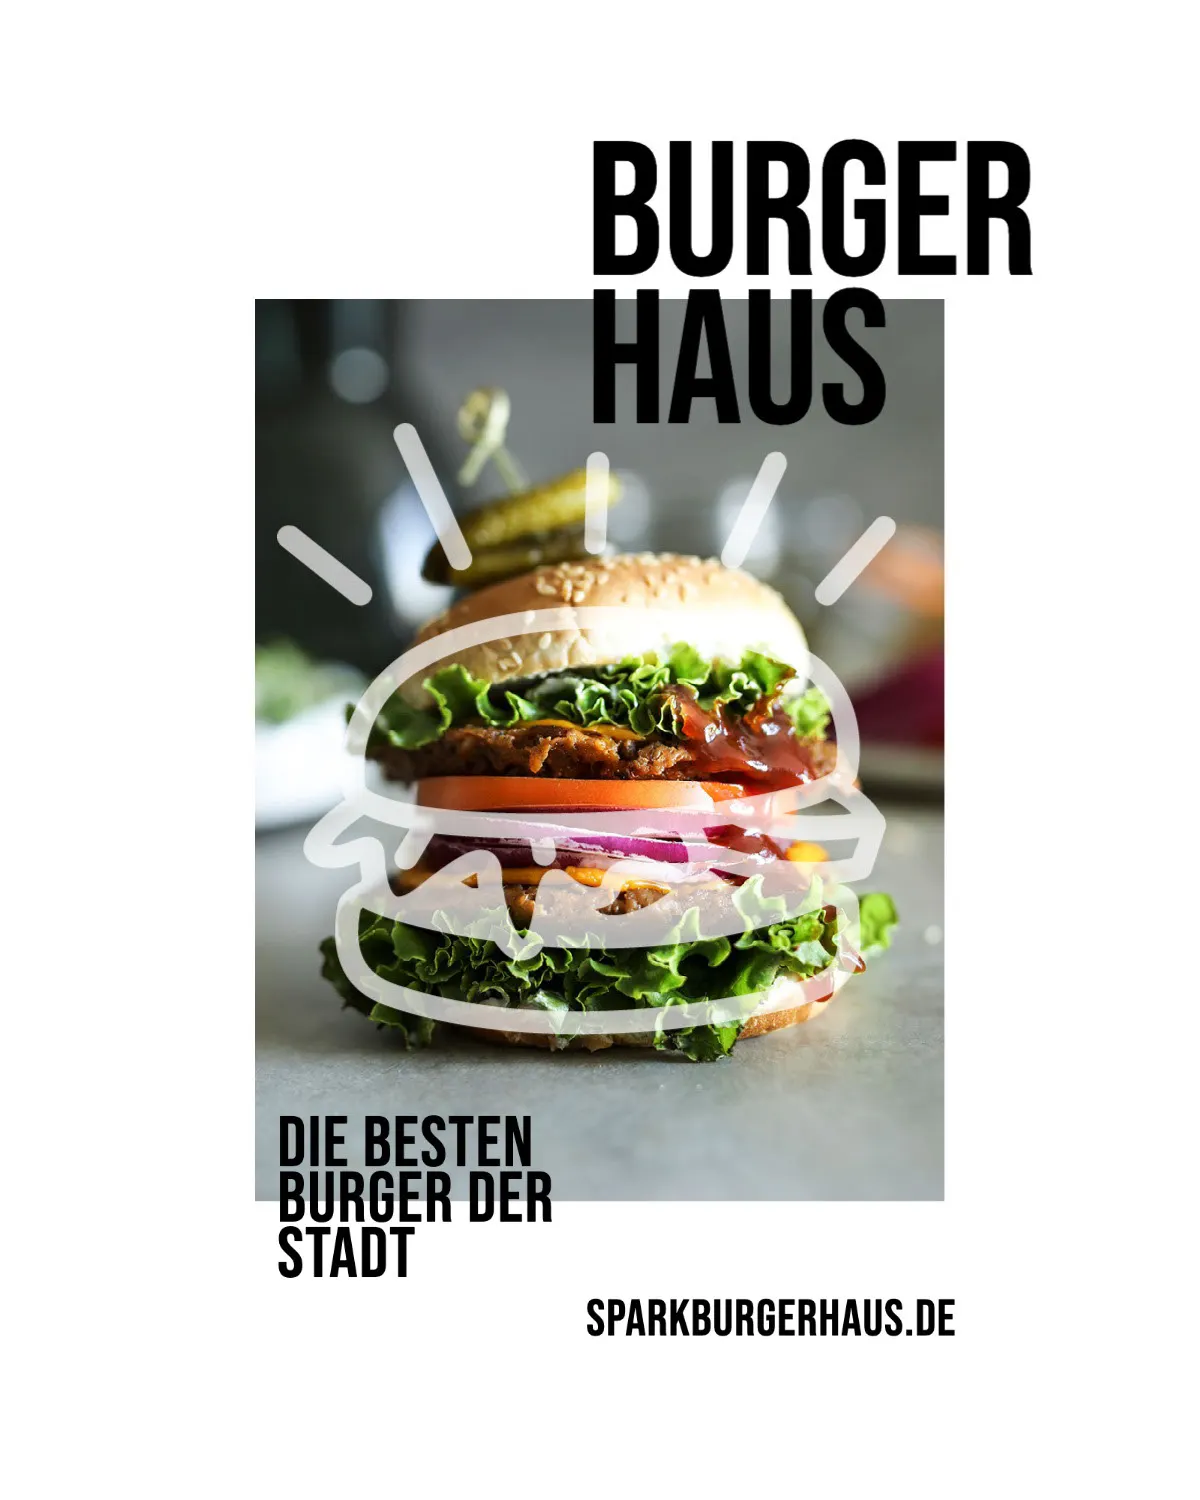 Black and White Burger Restaurant Instagram Feed Ad